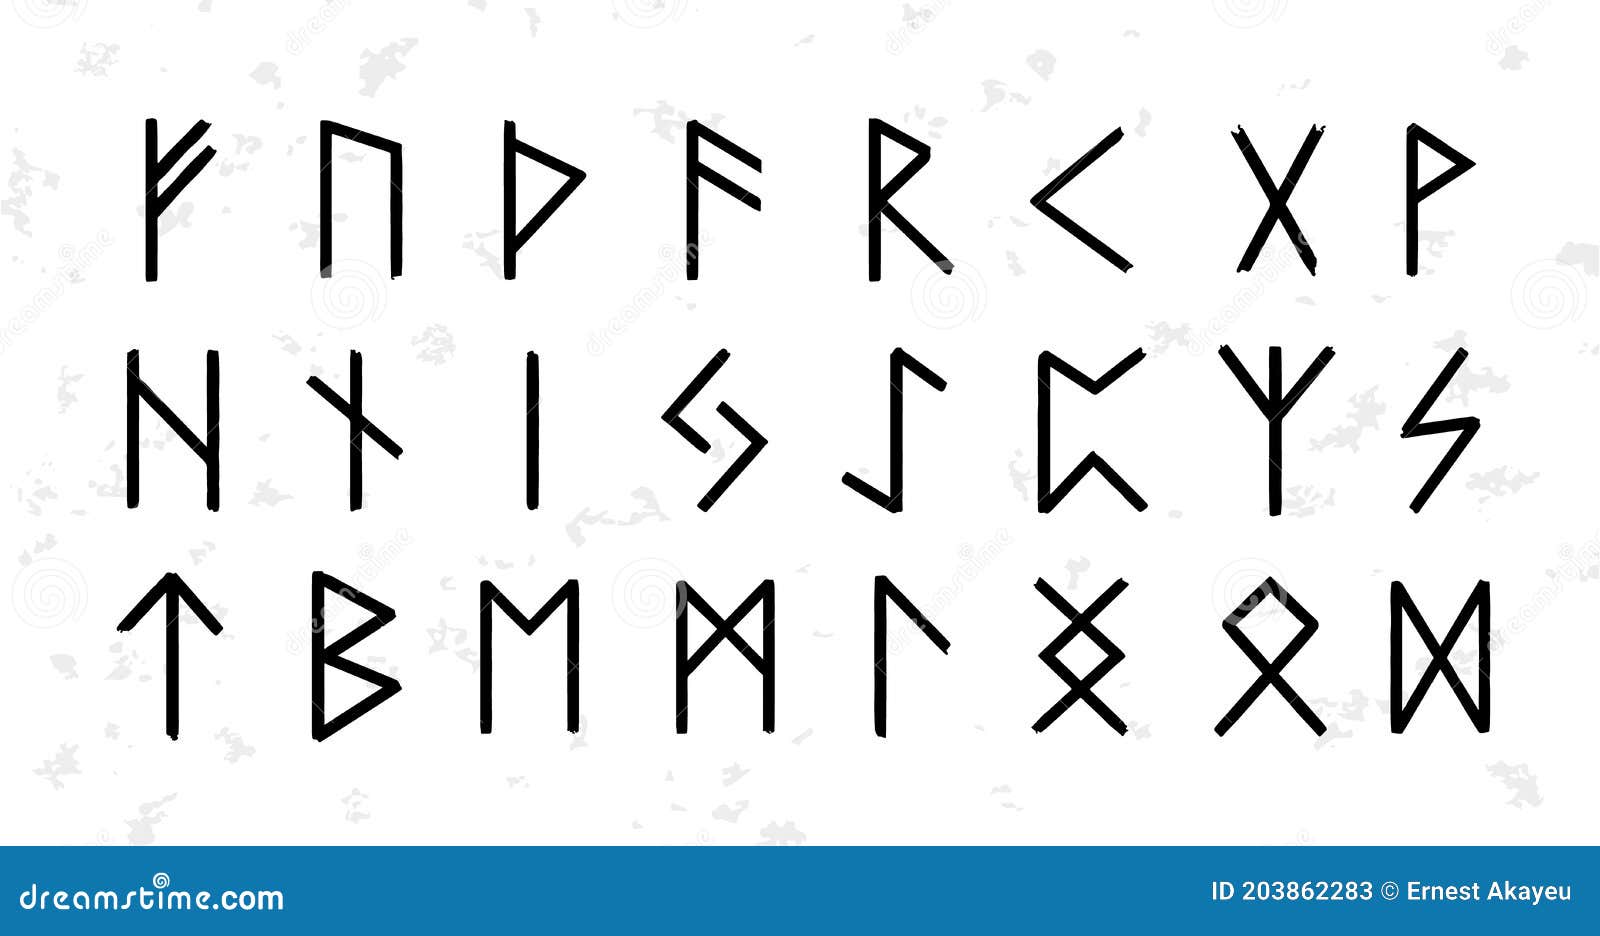 set-of-ordered-celtic-or-anglo-saxon-elder-futhark-runes-alphabet